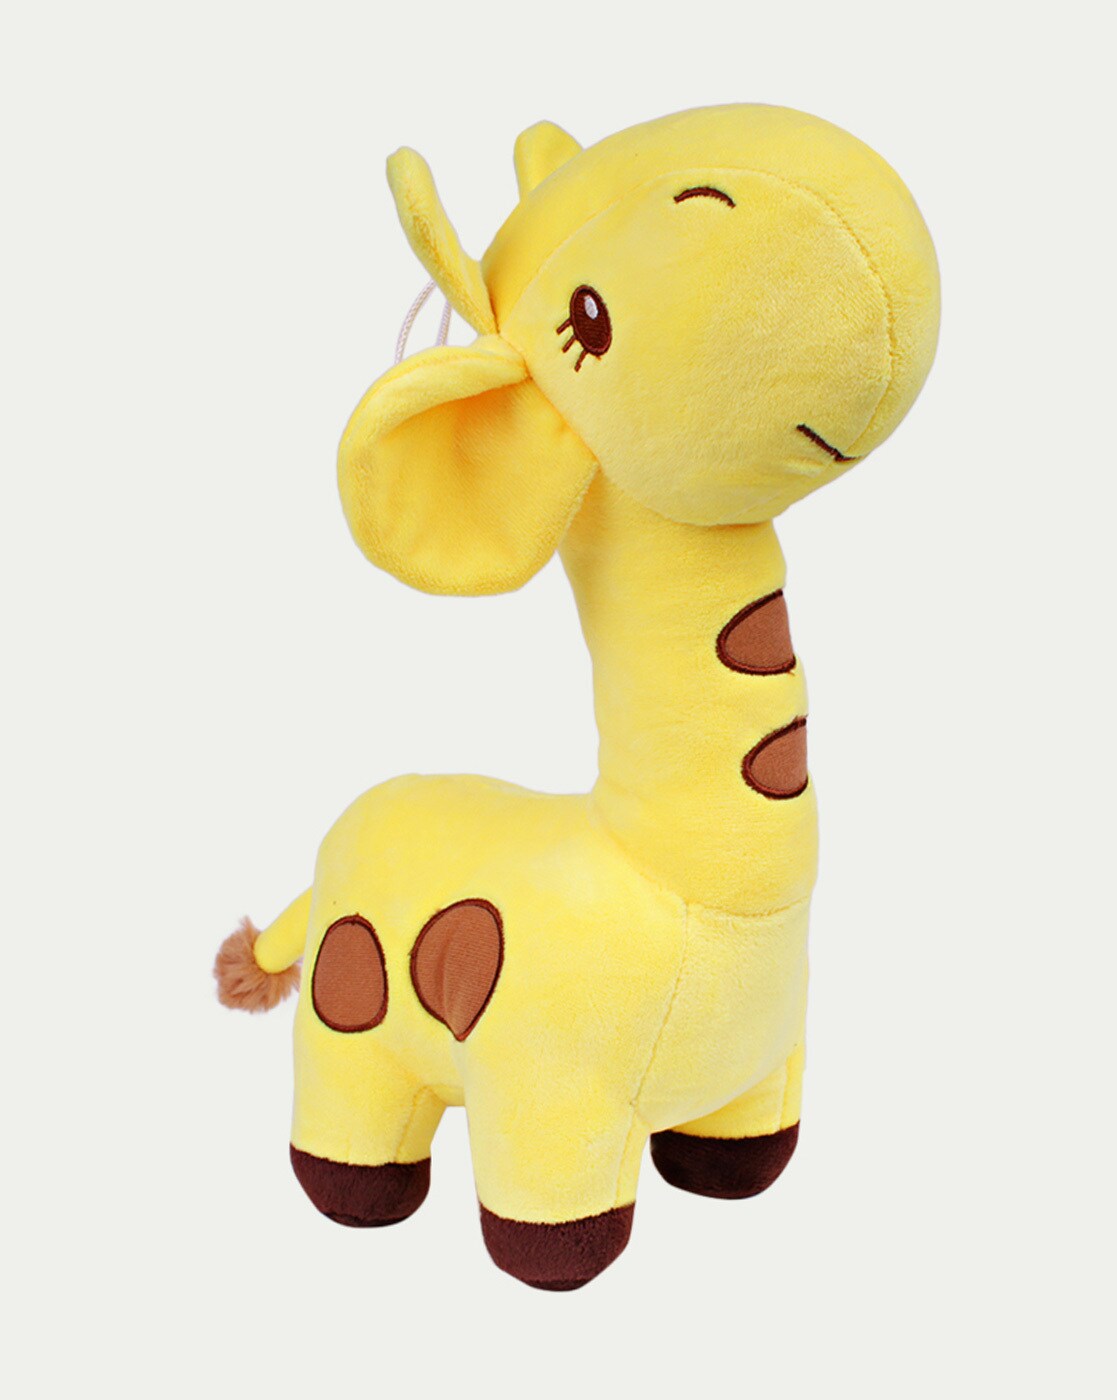 35cm Tapu Koko Plush Toys Cartoon Soft Stuffed Yellow Bird Animal Doll -  Supply Epic